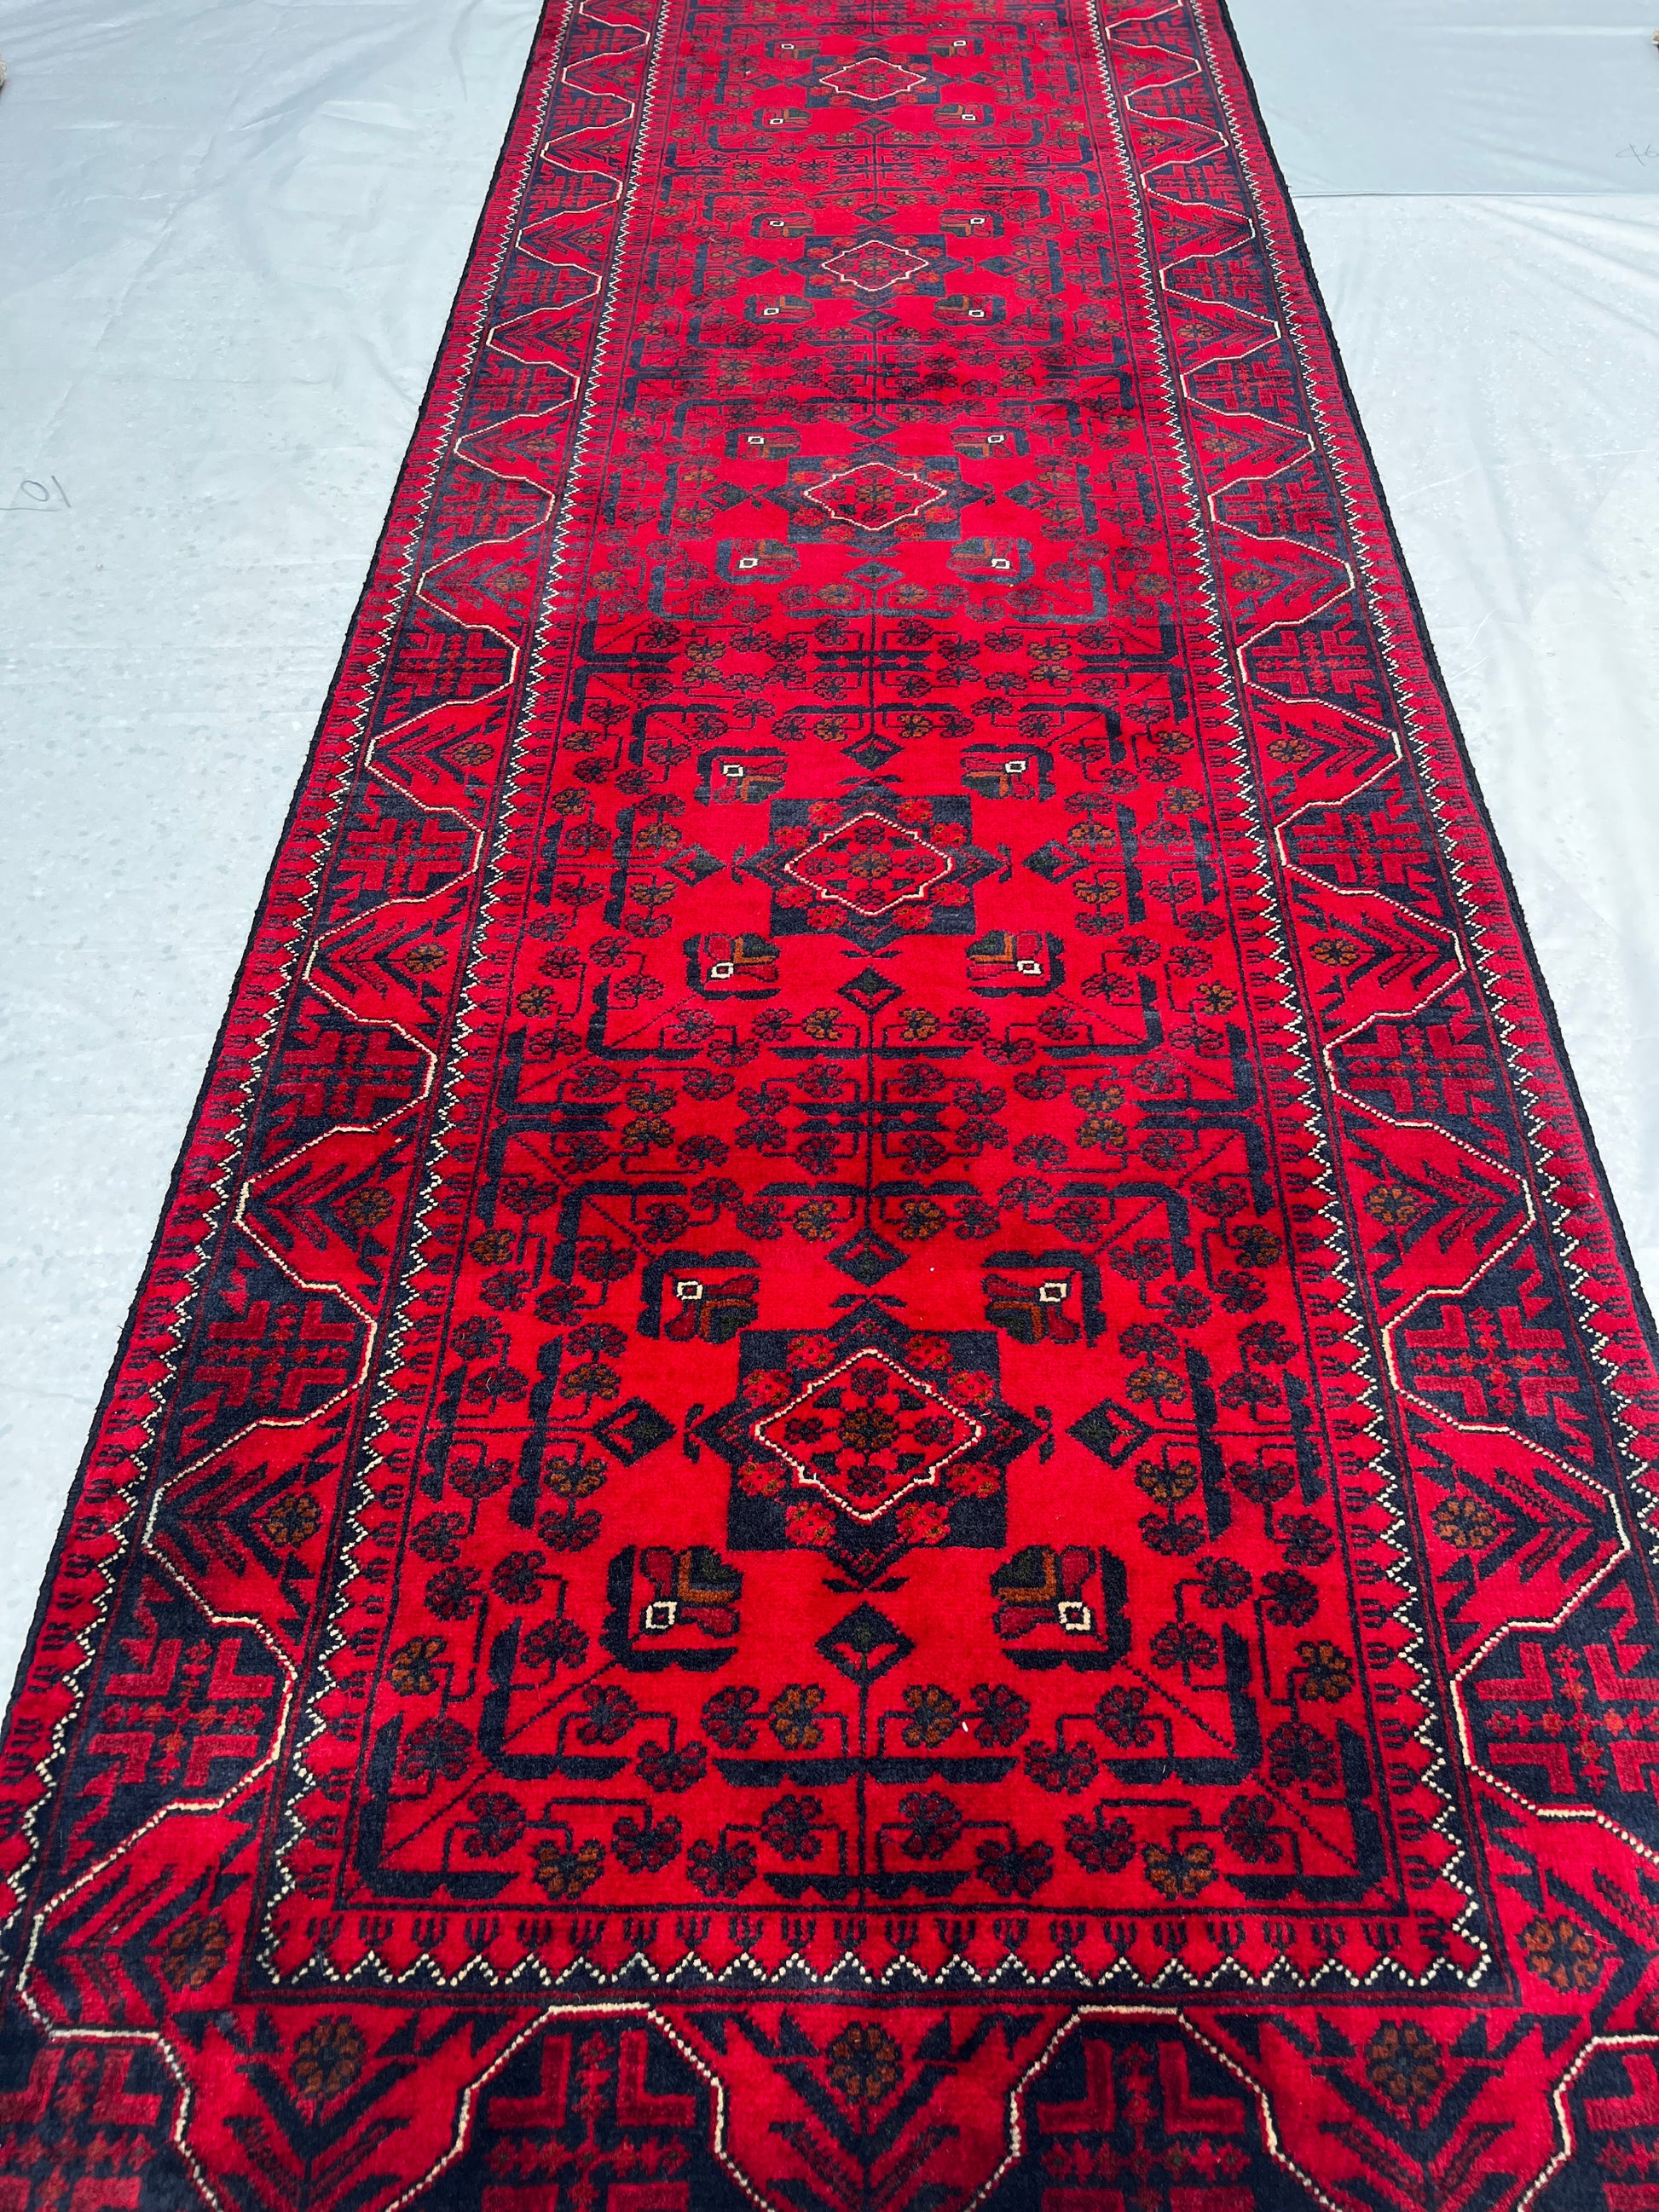 Afghan Hand Knitted/Knotted Hallway Runner Hand Woven Rug Size 9.8ft x 2.6ft (KM-KL-9X2-RU-N)  Khal Muhammadi Kelasay Pattern(Andkhoi) - Kabul Rugs